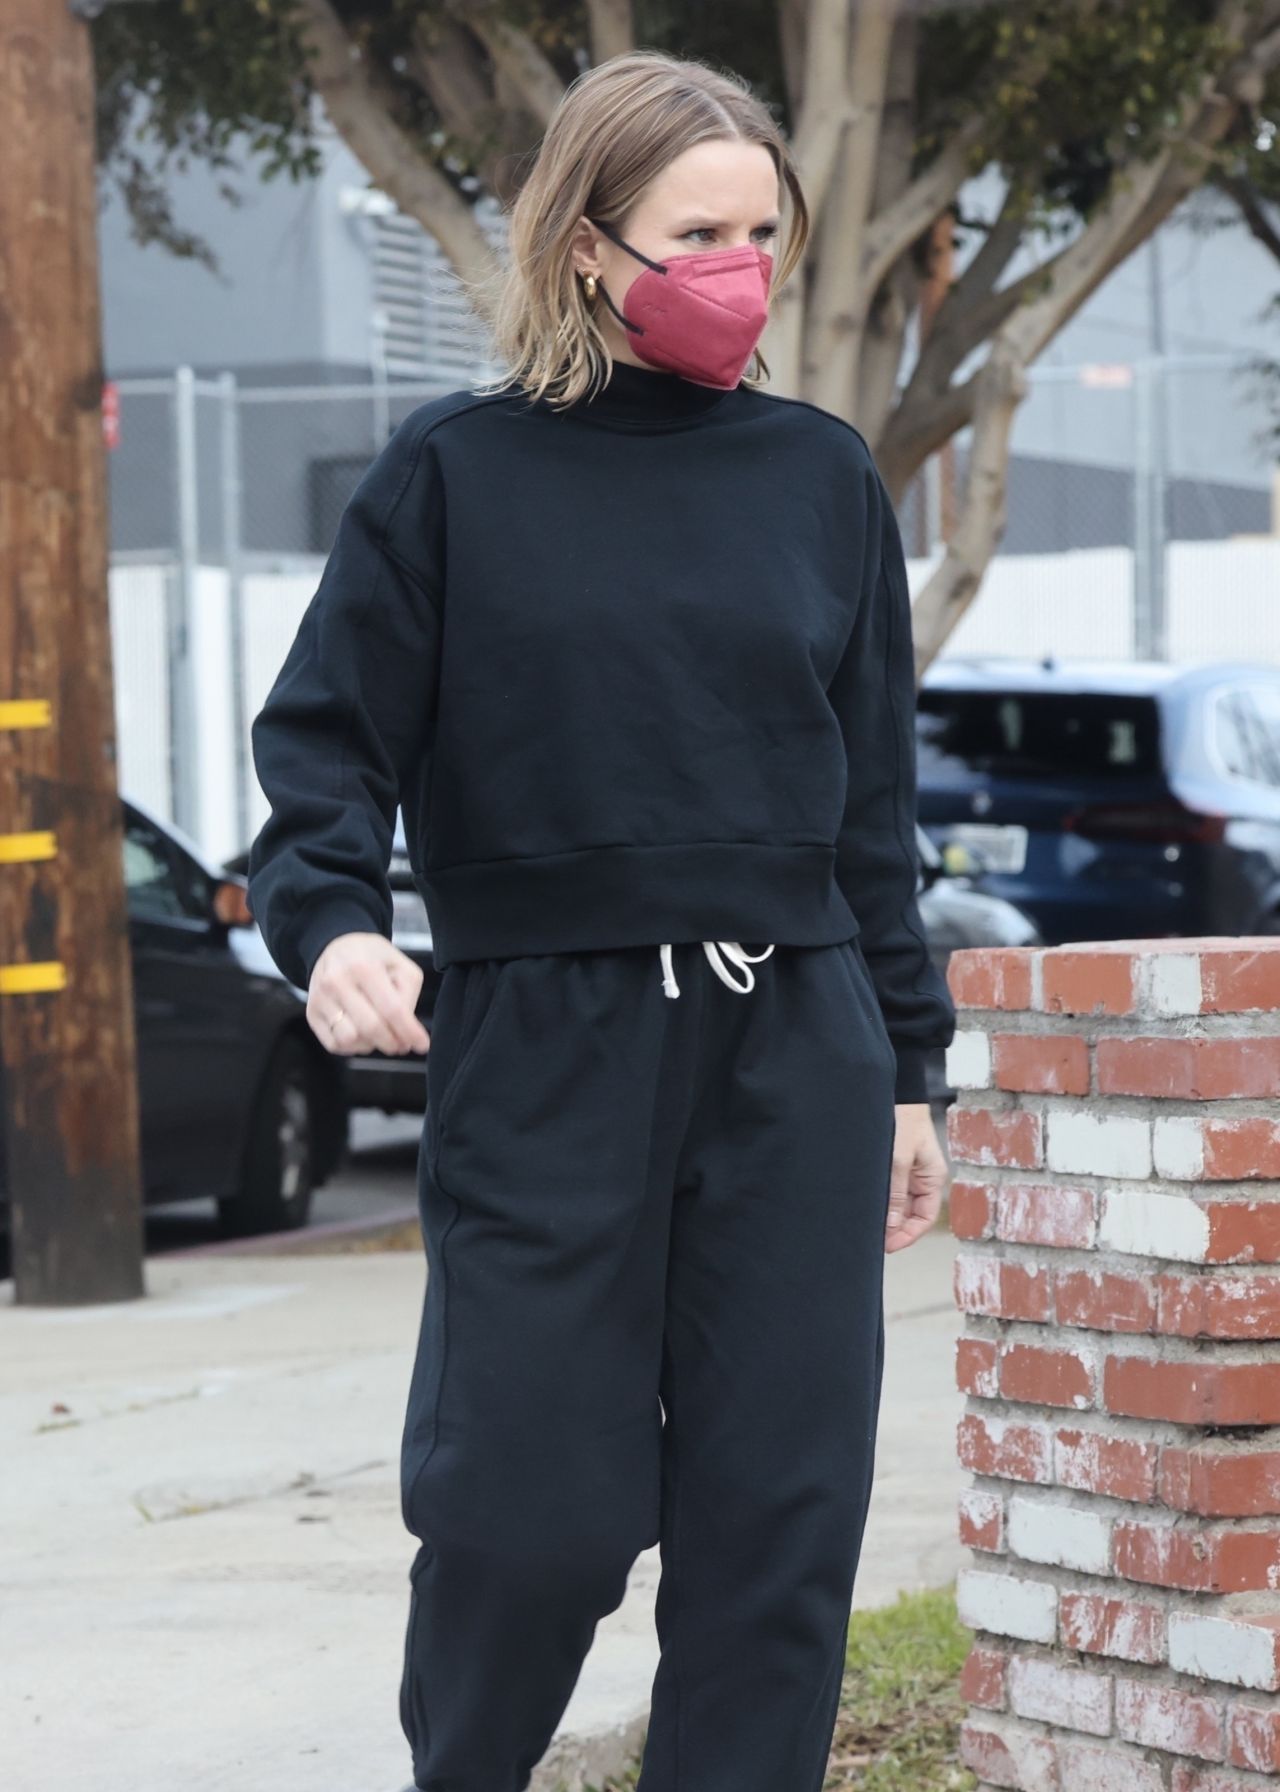 Kristen Bell Wears Comfy Black Sweatpants and a Matching Sweatshirt ...